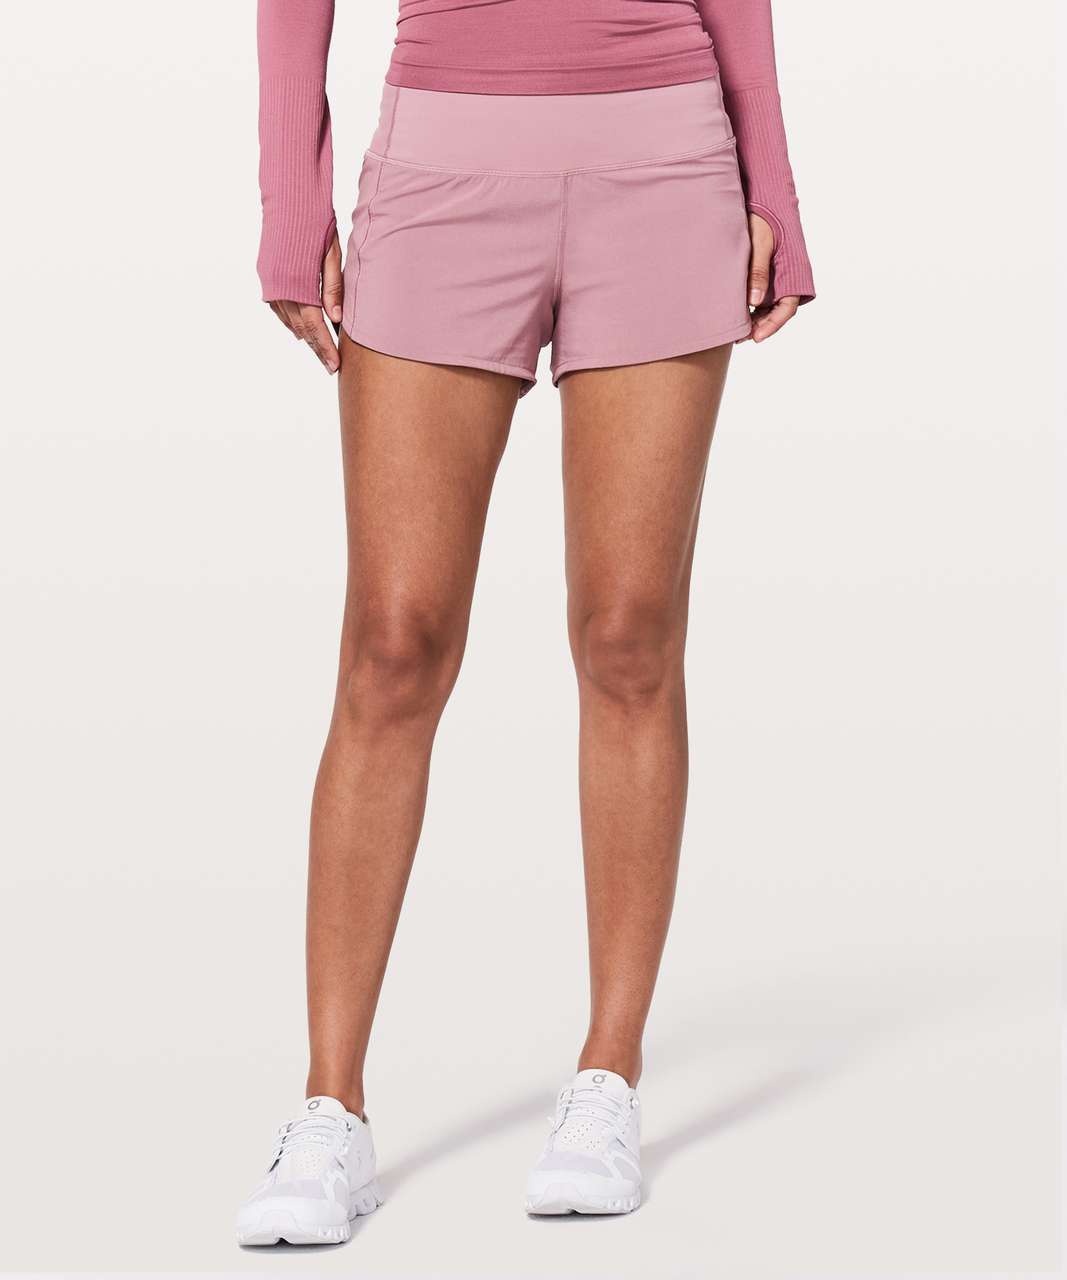 lululemon speed up shorts pink and maroon